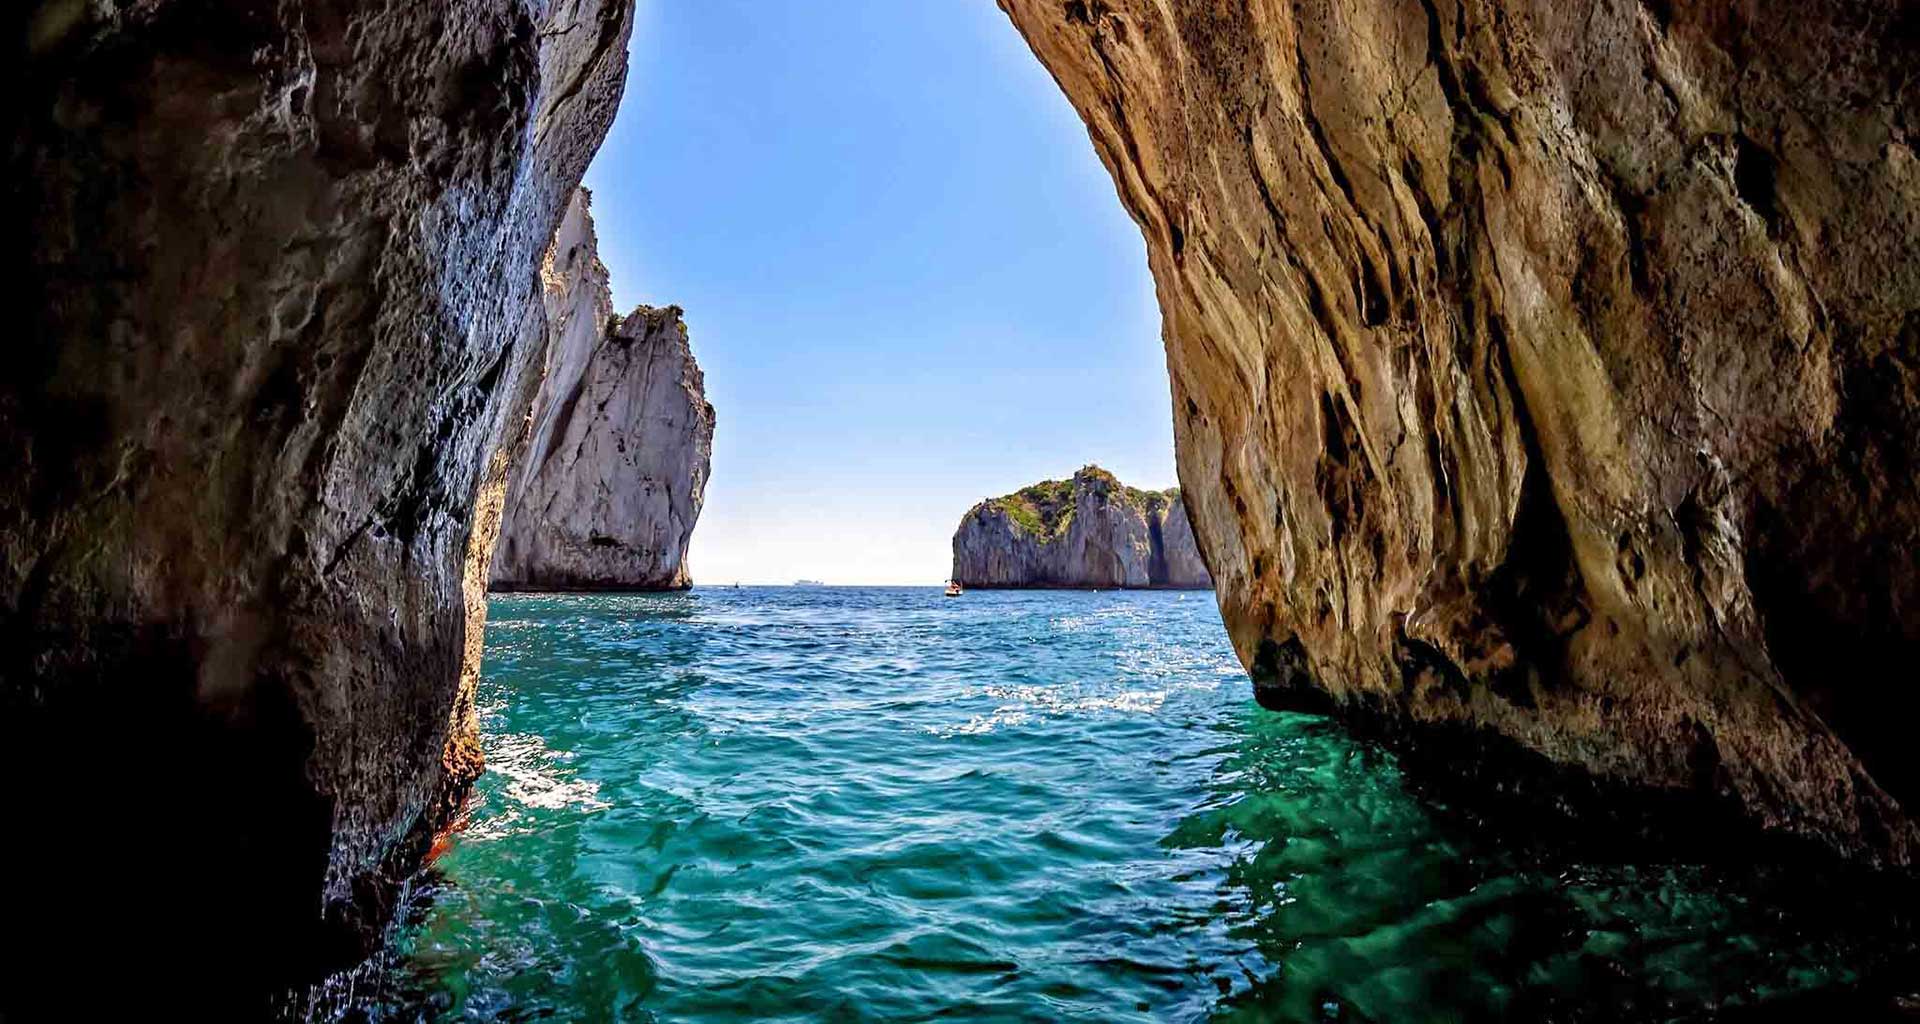 The Amalfi Coast grottos